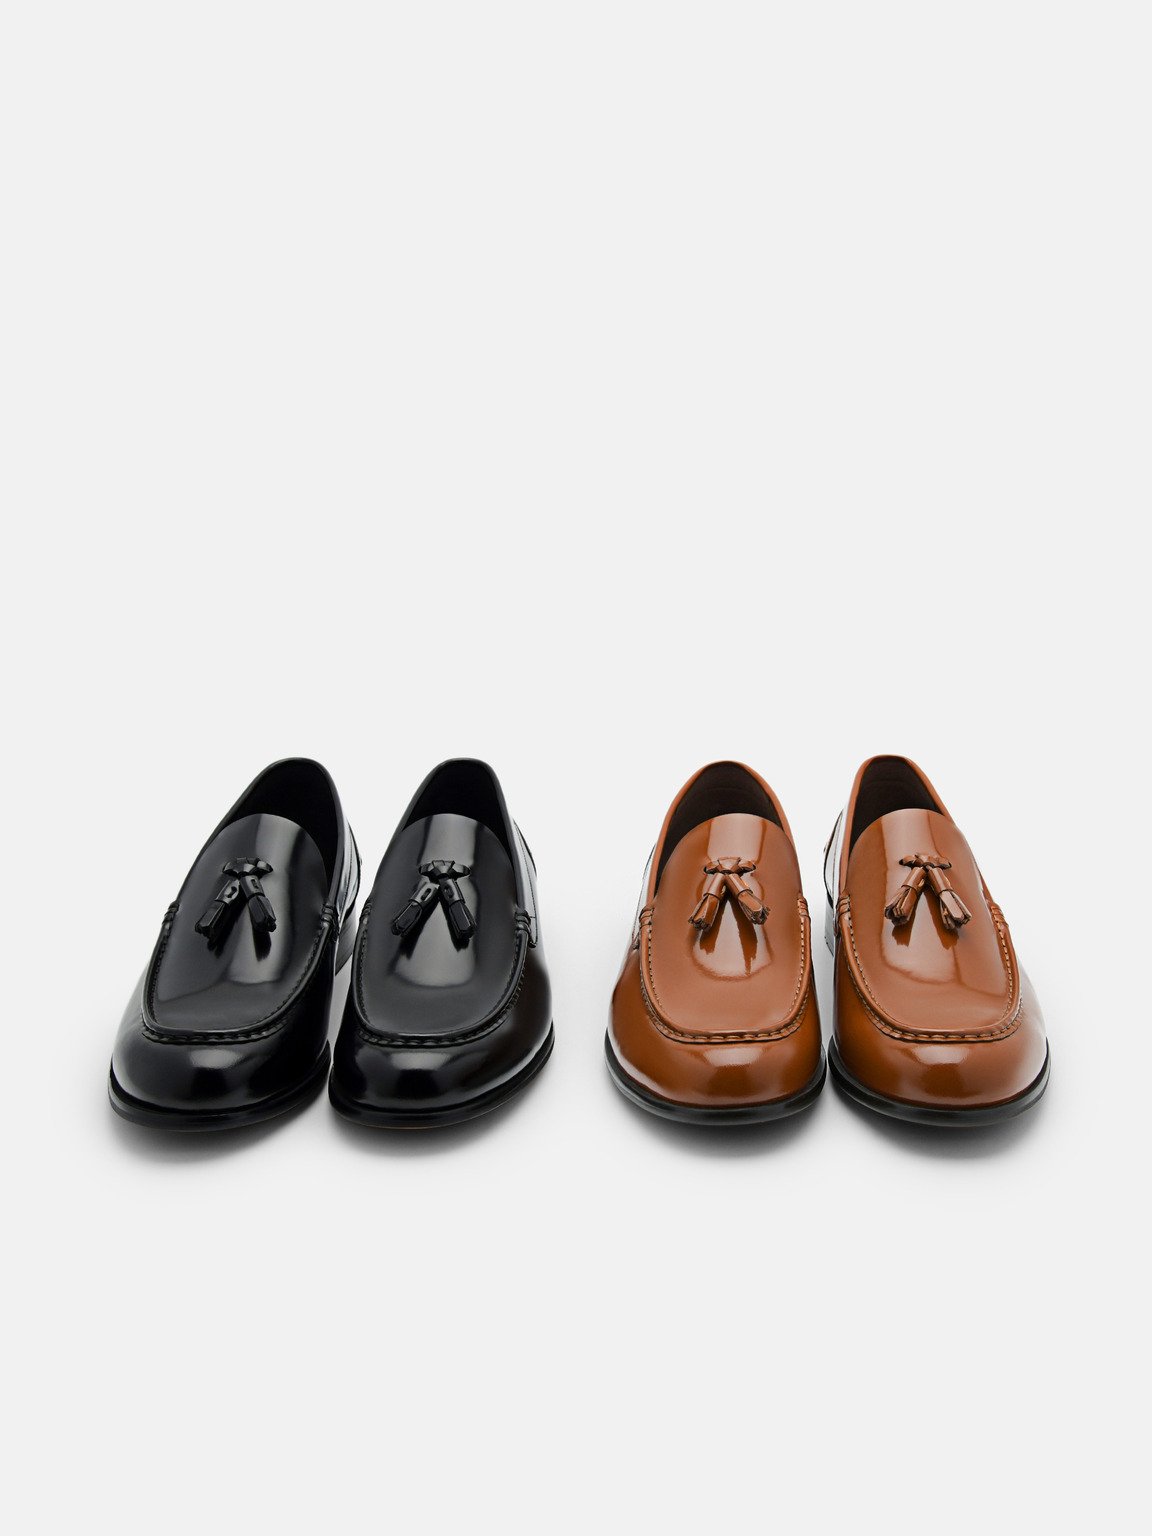 Leather Tassel Loafers, Black